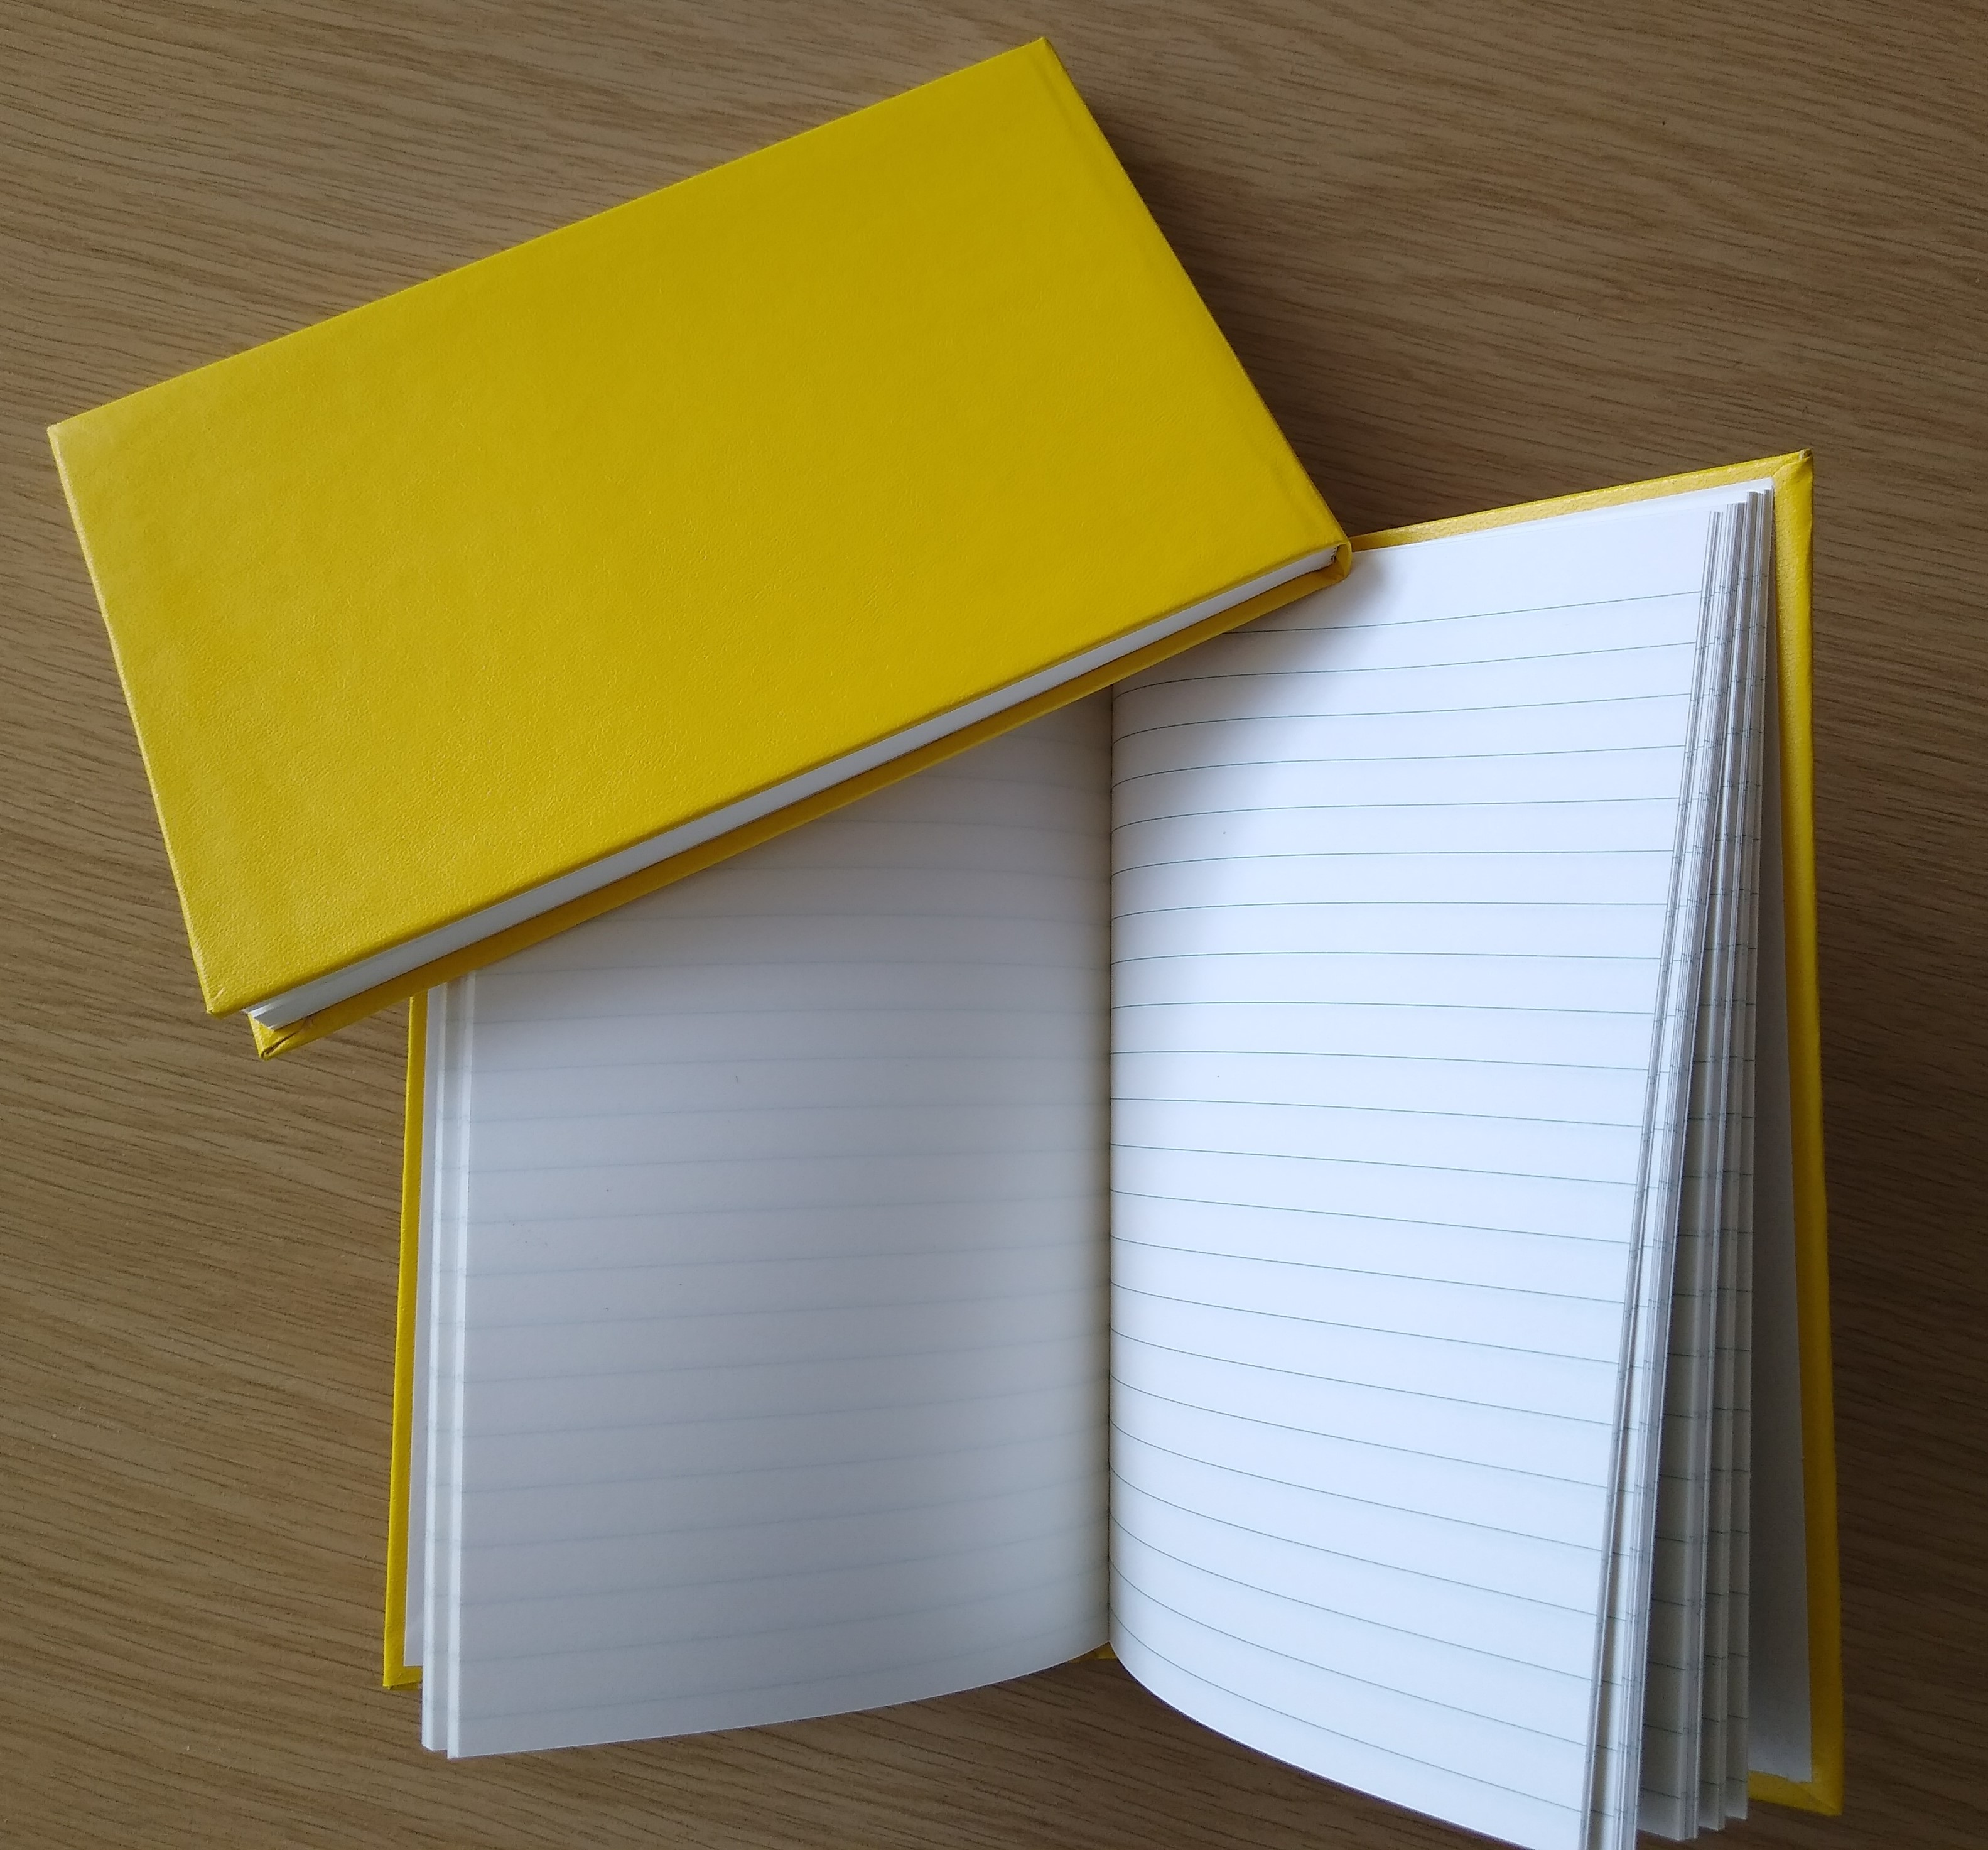 Field notebook